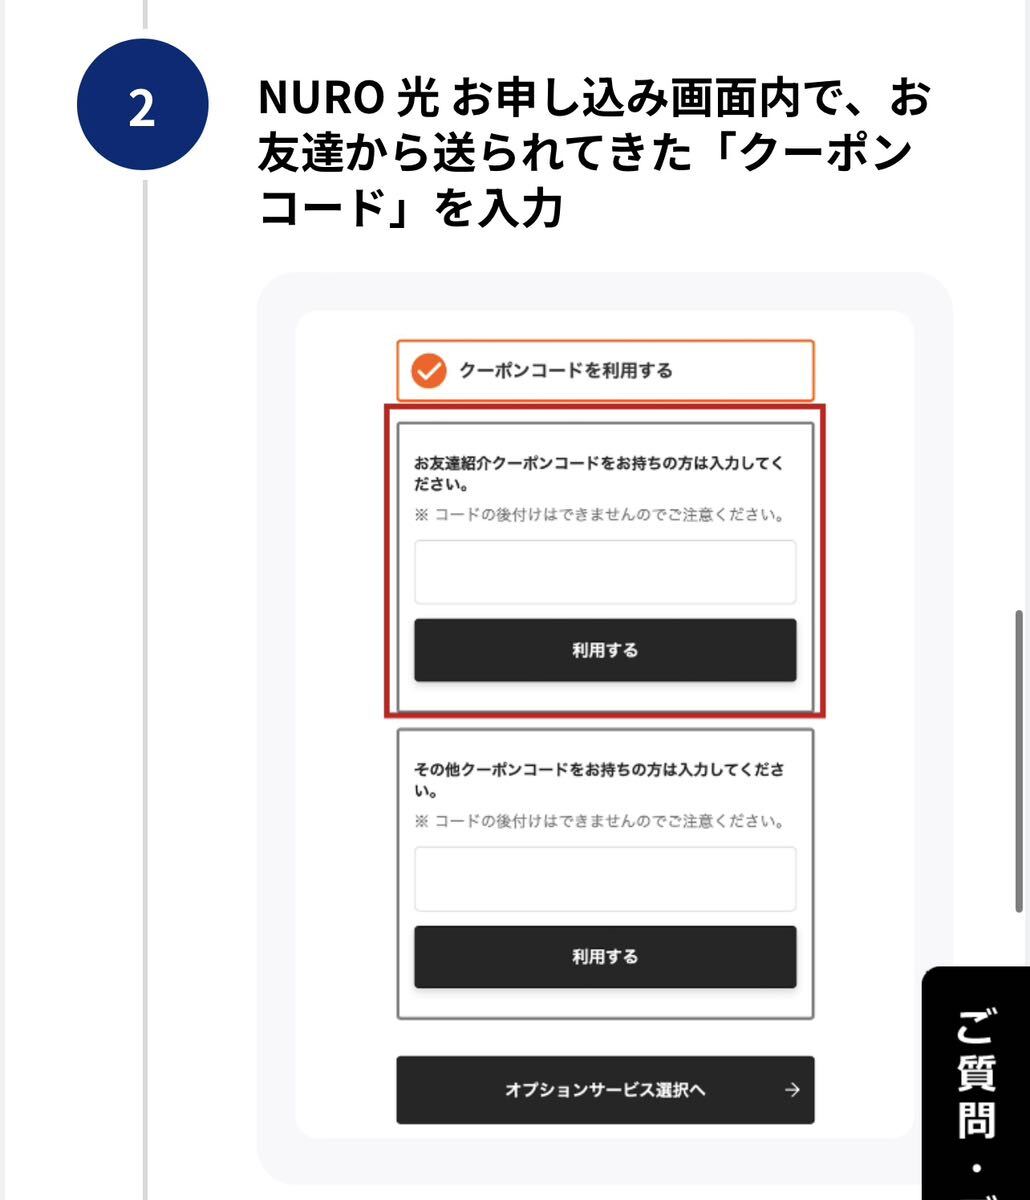 NURO light application when!! code input . cash-back 11000 jpy increase amount!!